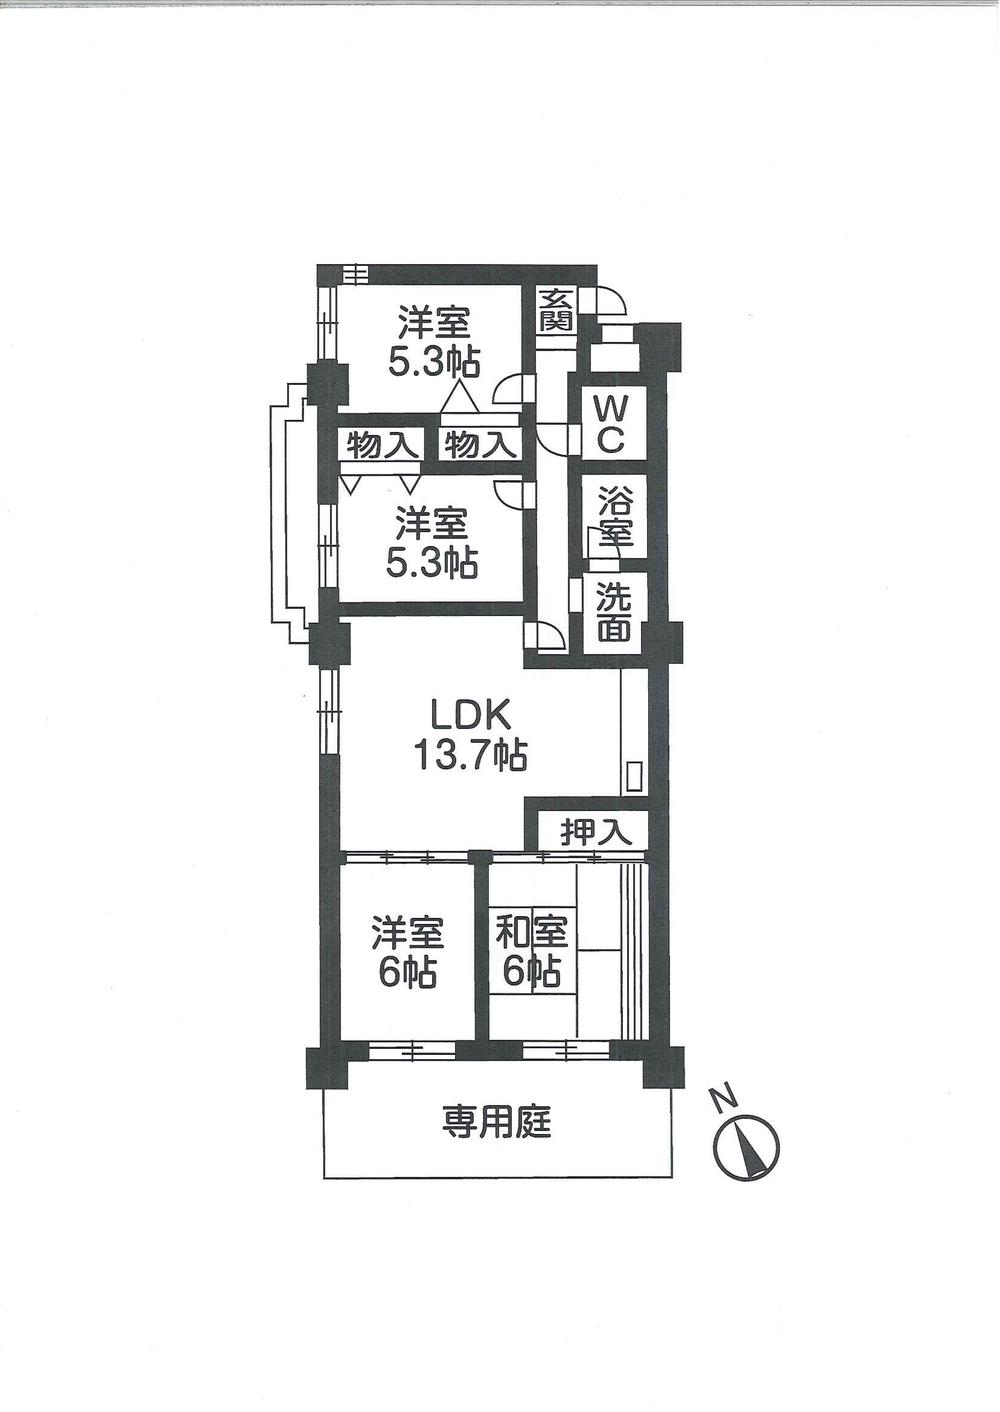 Floor plan. 4LDK, Price 8.9 million yen, Occupied area 77.43 sq m